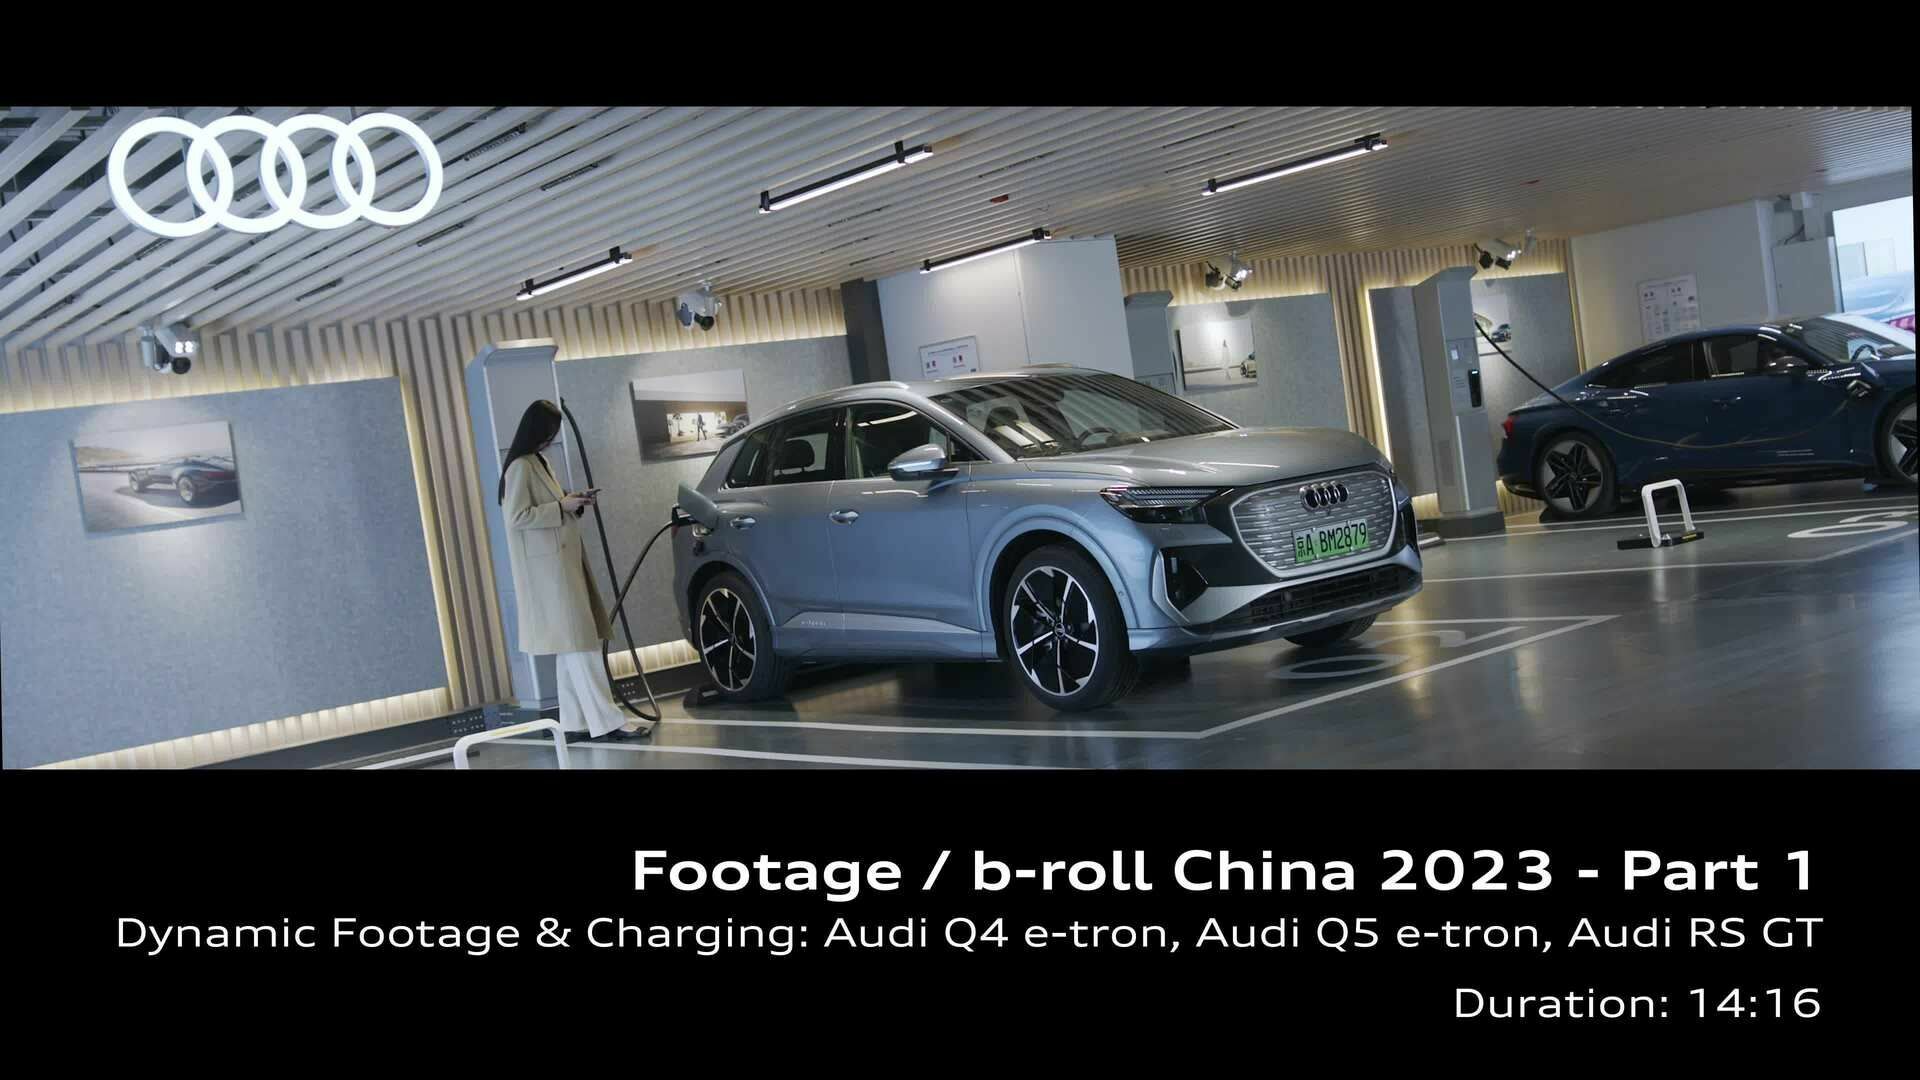 Footage: Auto Shanghai 2023 – Fahraufnahmen & Audi Ladestationen